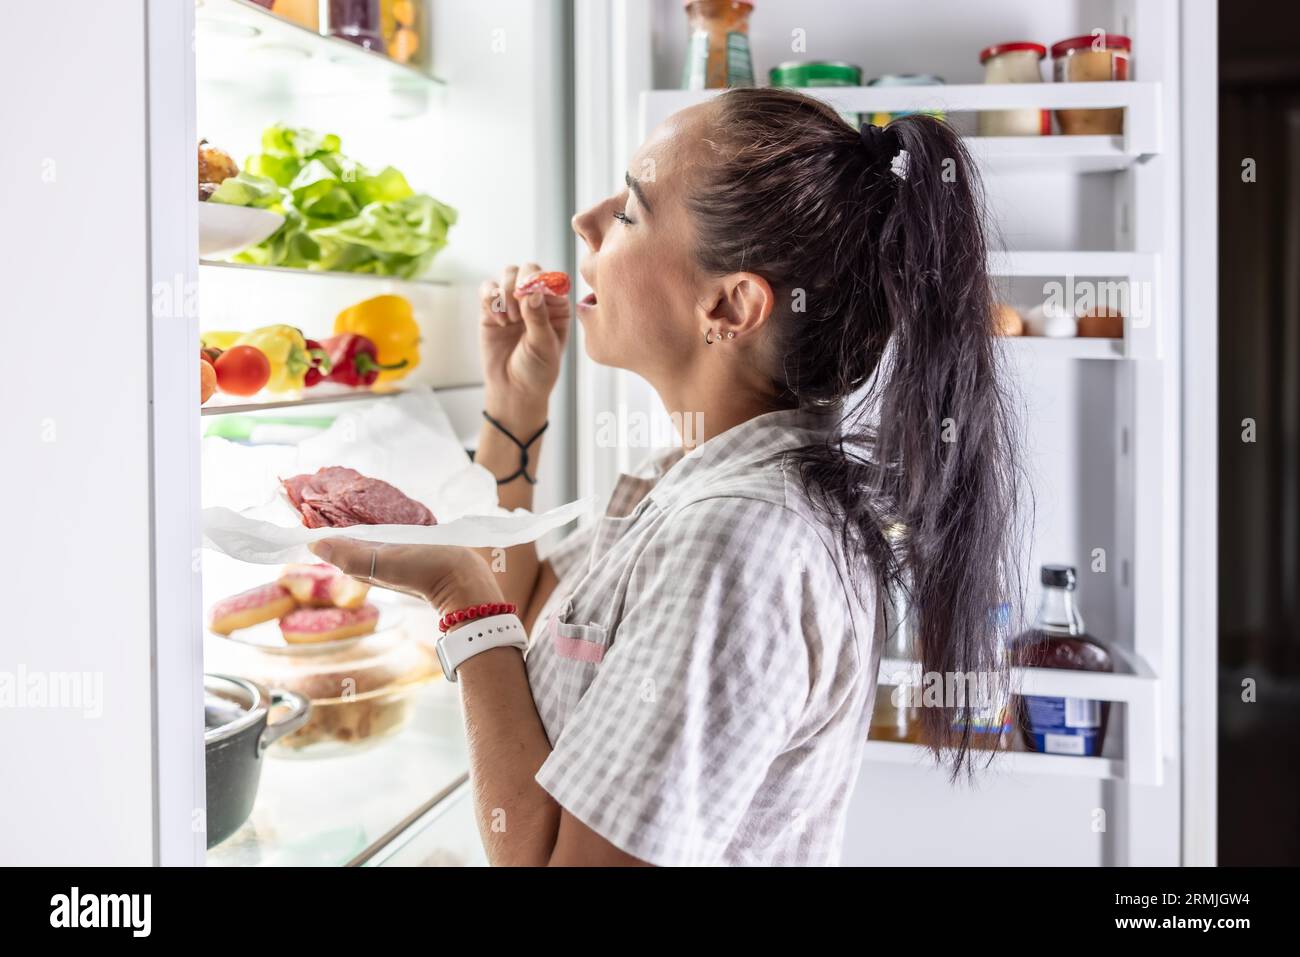 Very hungry woman in pajamas enjoying salami at night by the fridge. Stock Photo